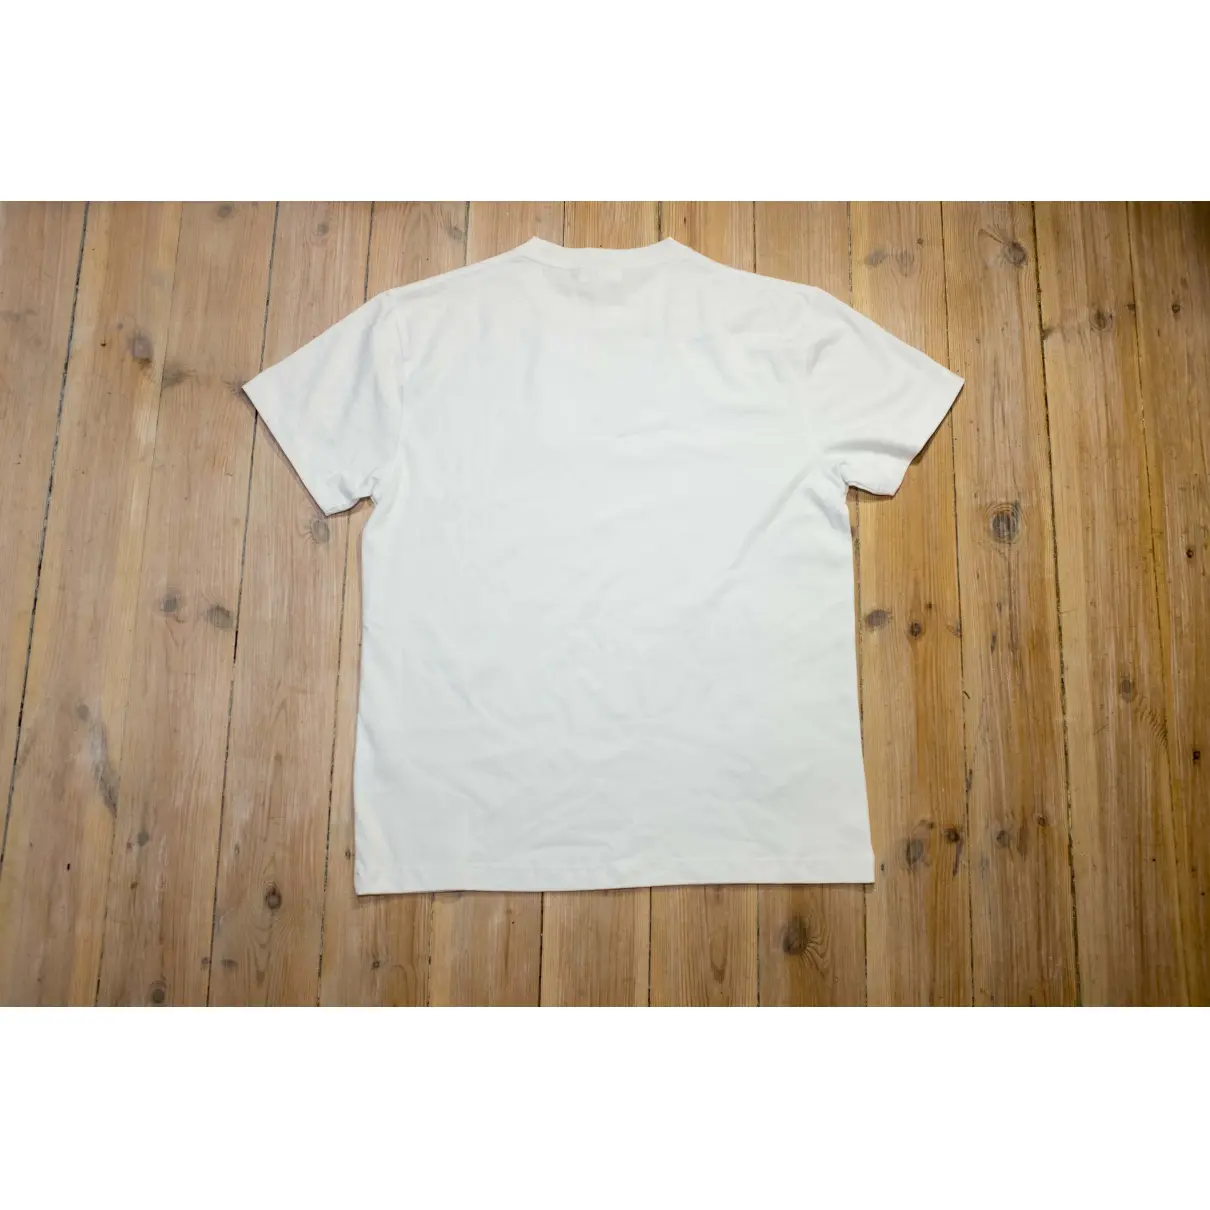 Buy Soulland White Cotton T-shirt online